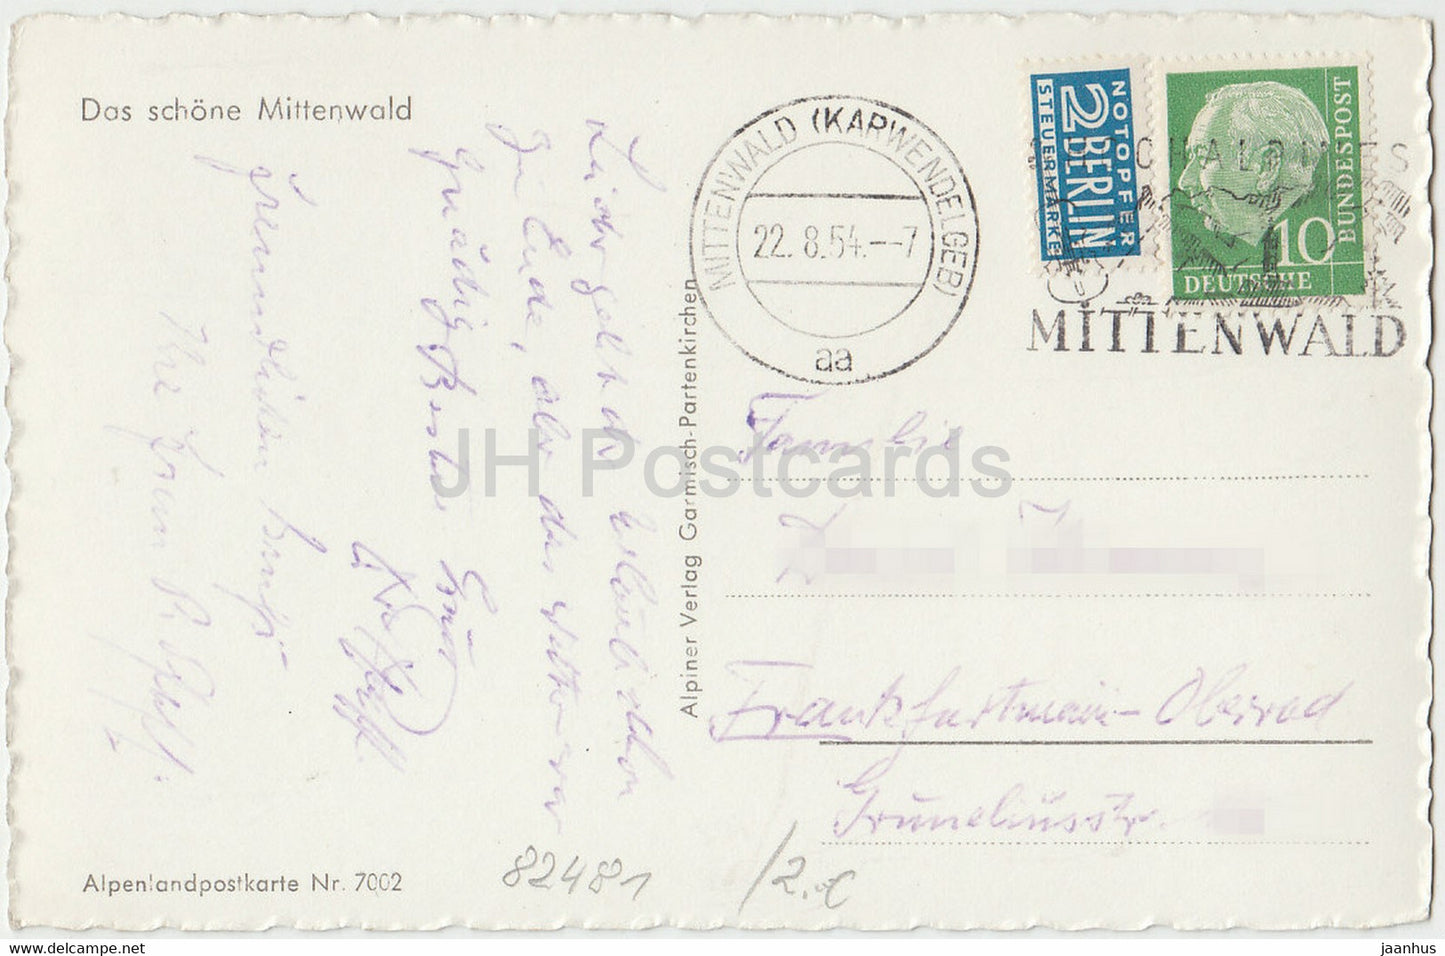 Mittenwald gegen Karwendelgebirge 2476 m - old postcard - 1954 - Germany - used